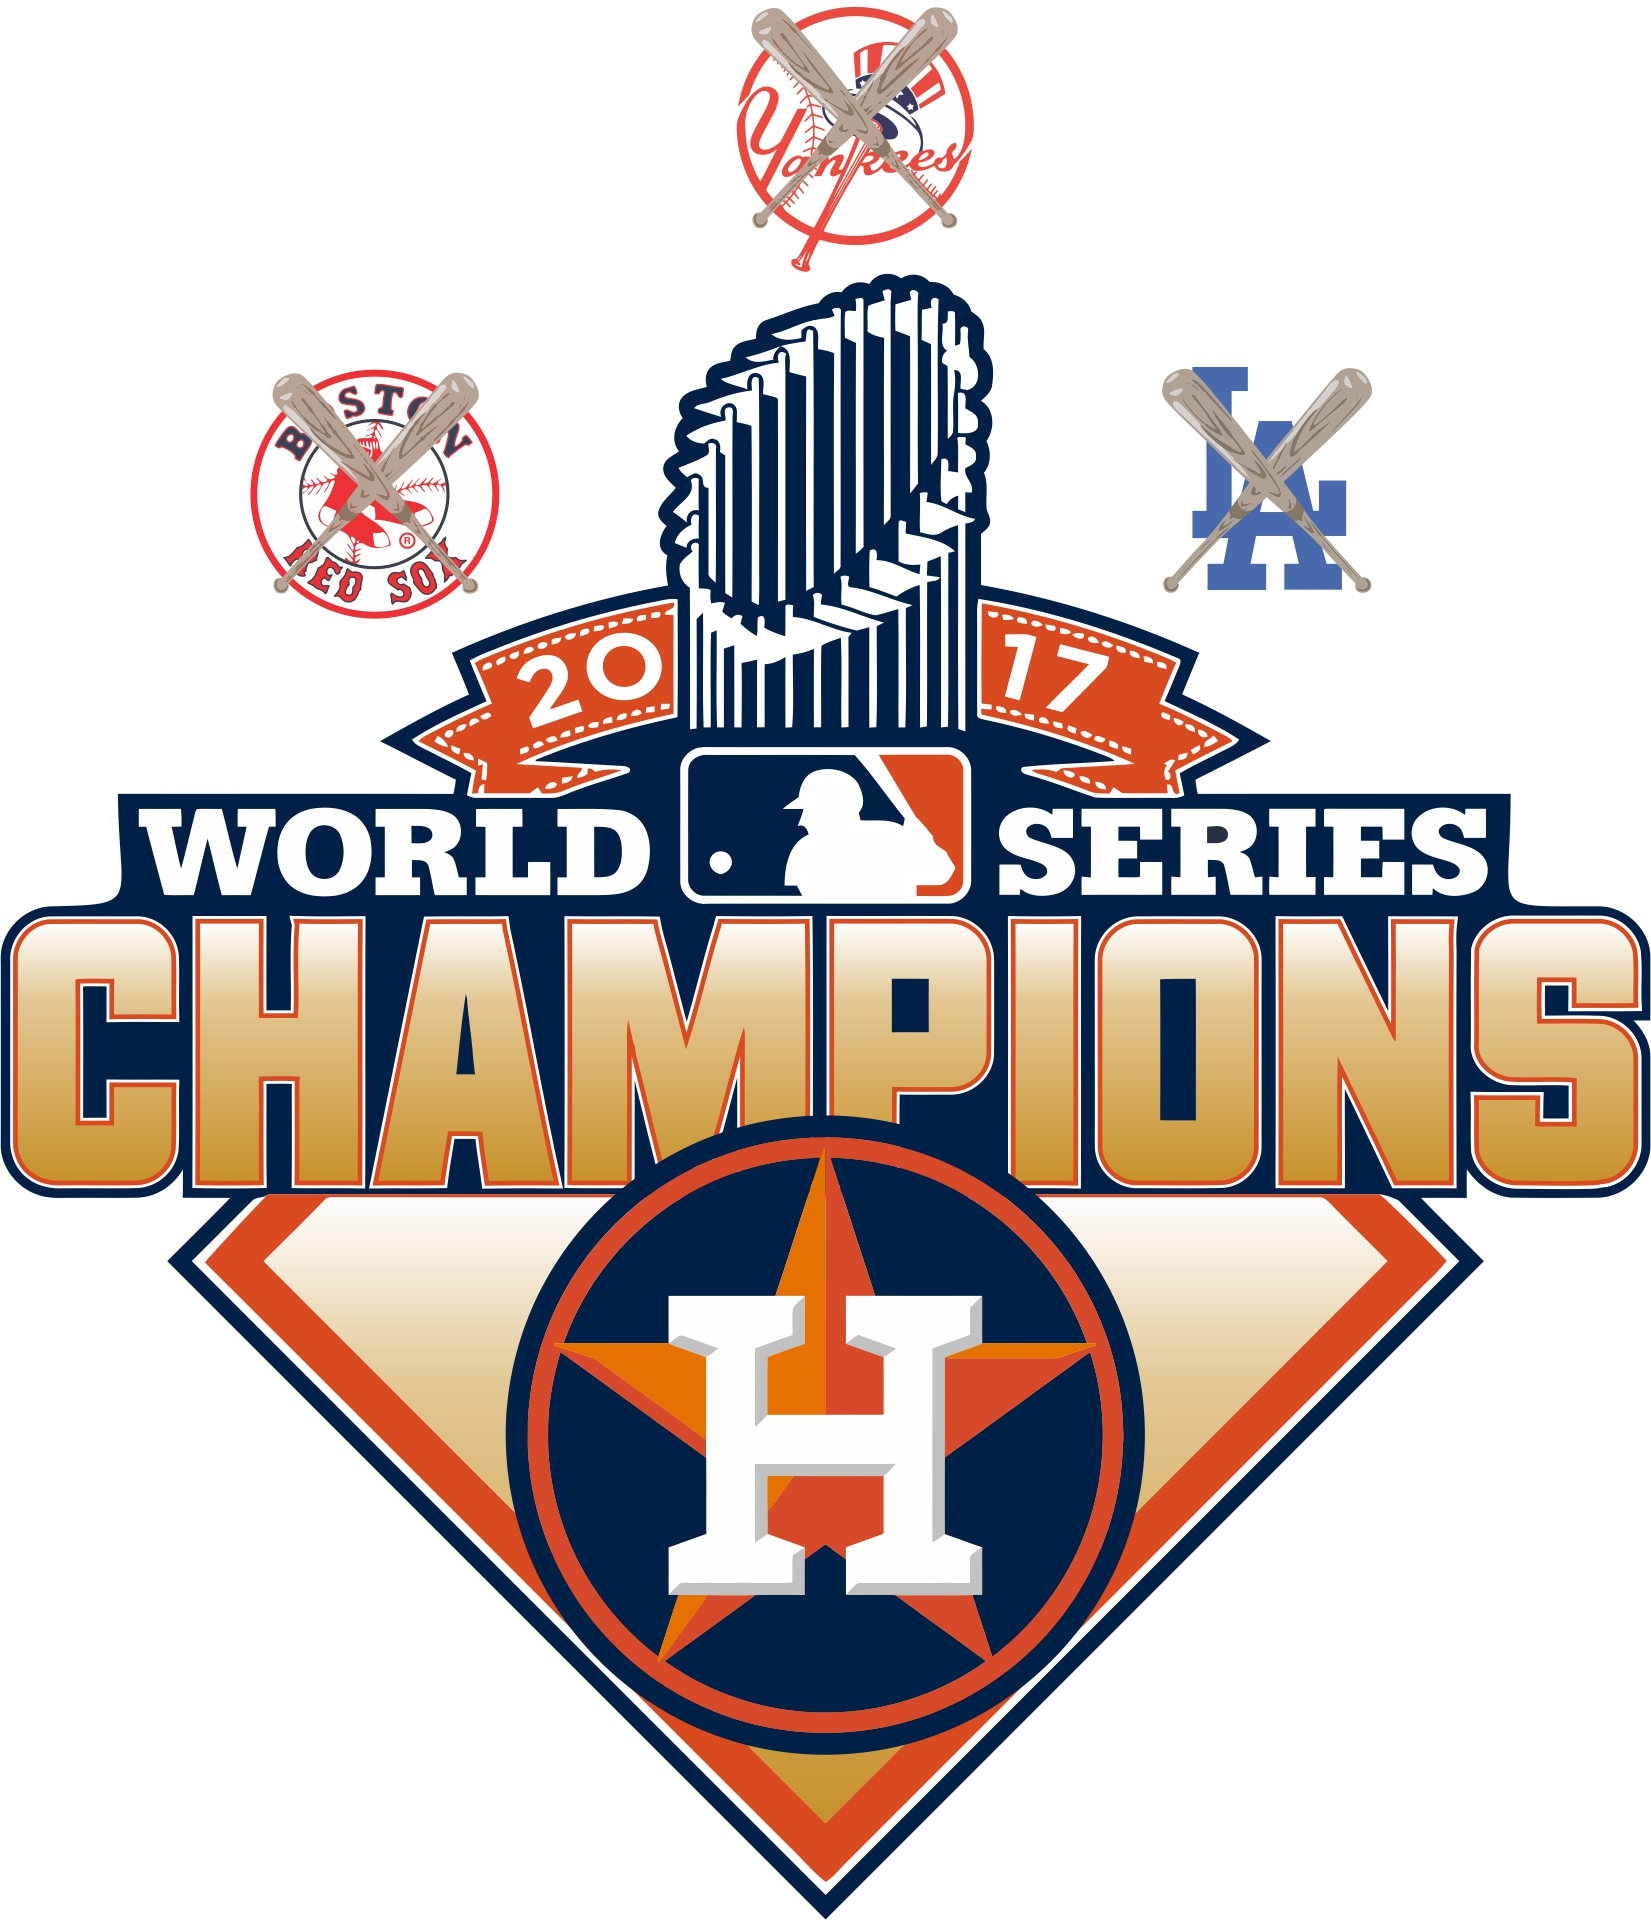 Houston Astros 2017 World Series Champions Decal.